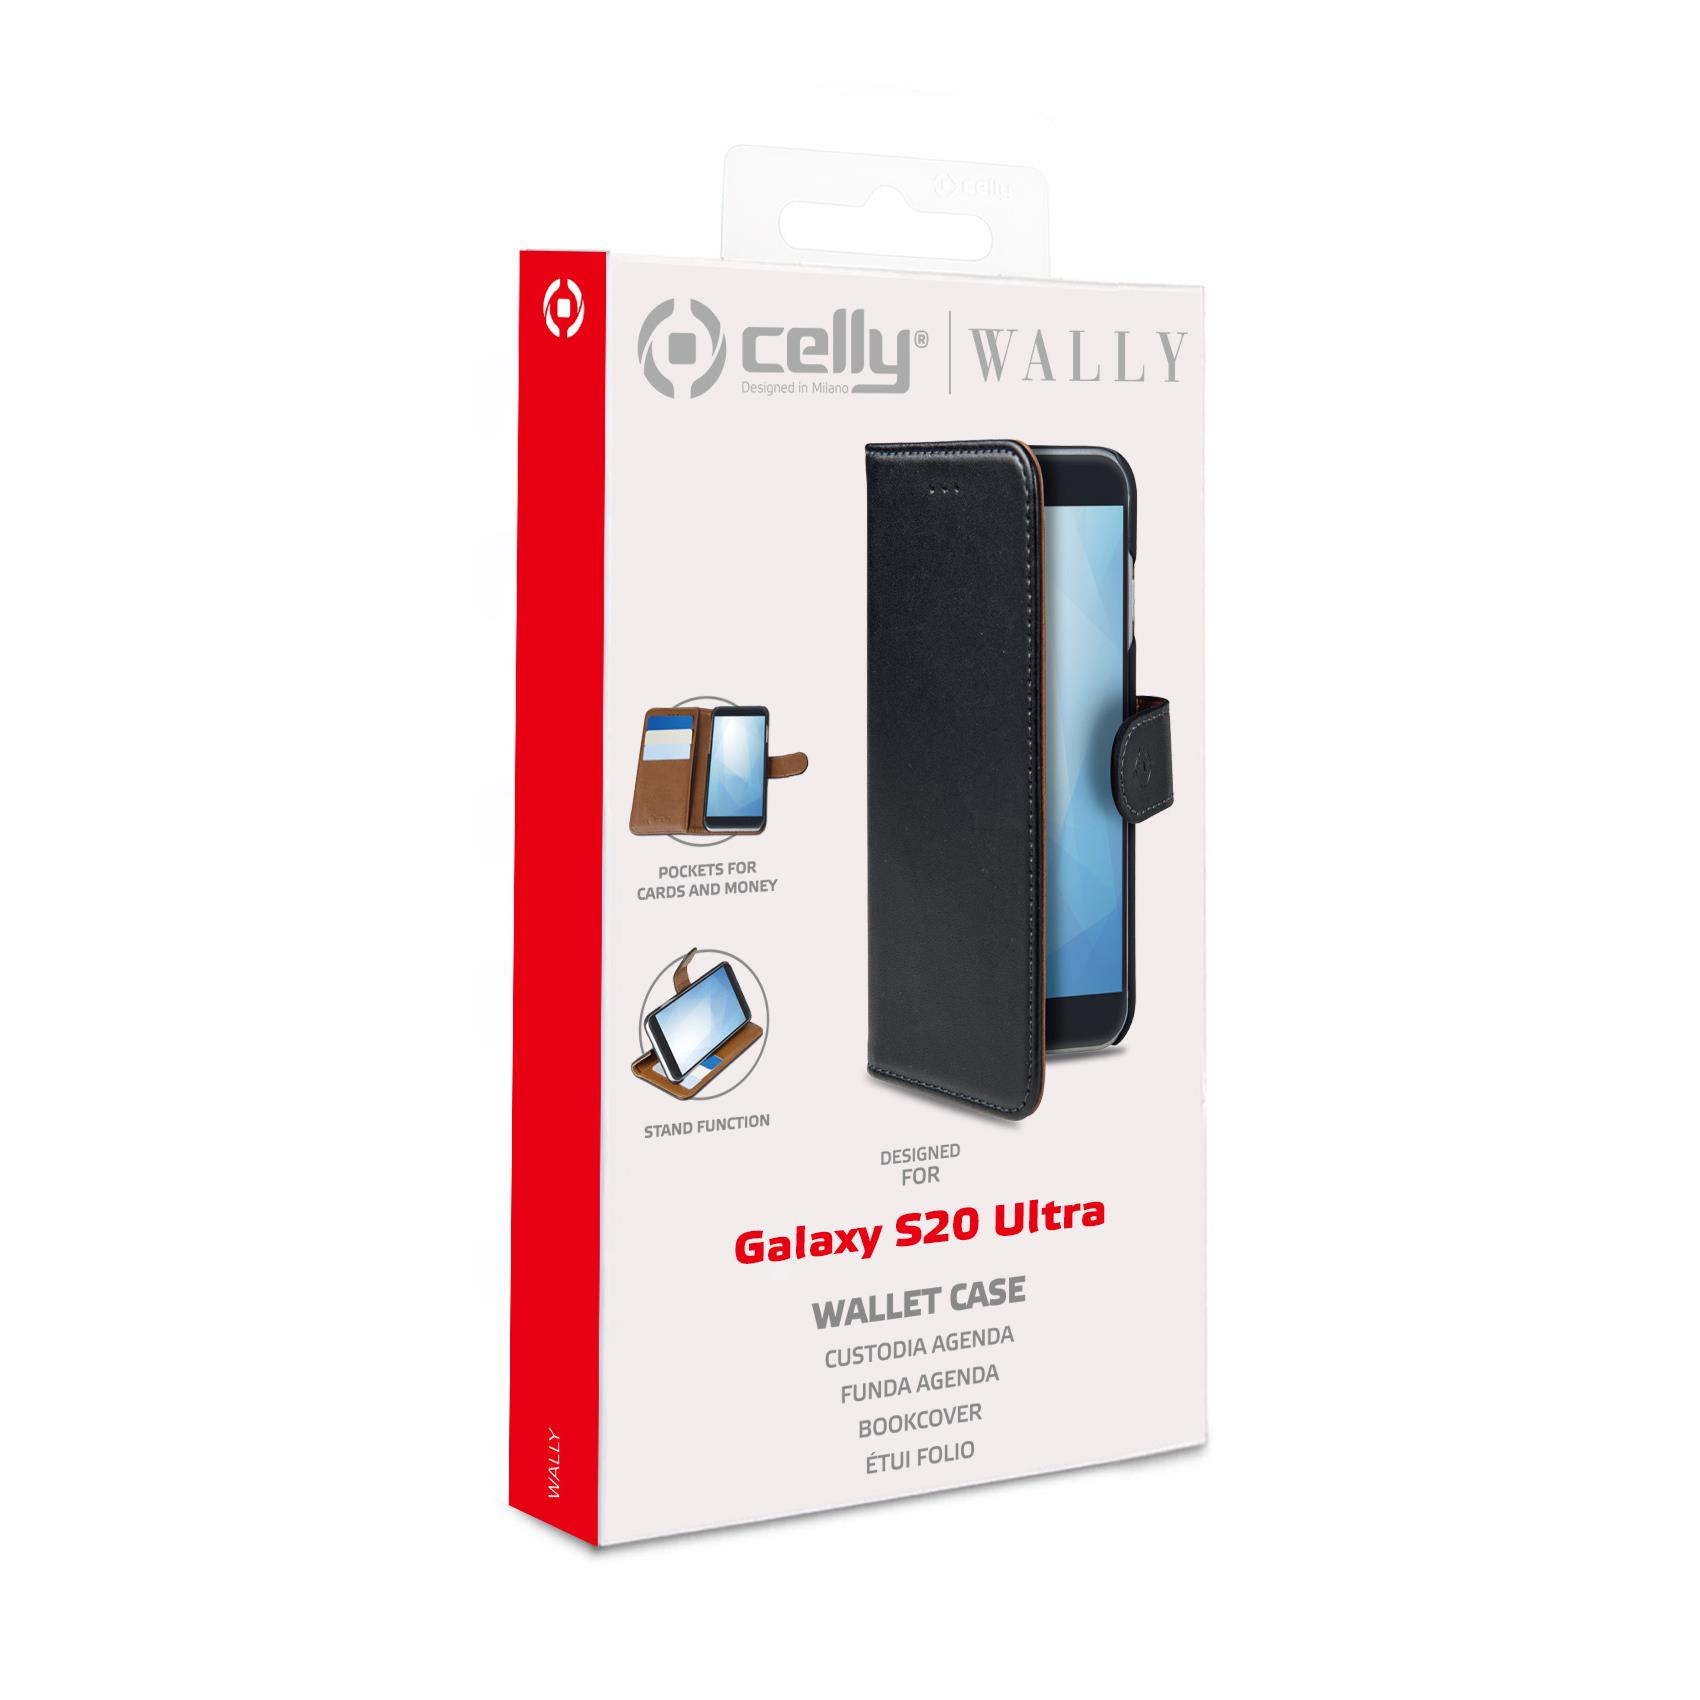 Wally Case Galaxy S20 Ultra Black Celly Wally991 8021735756507